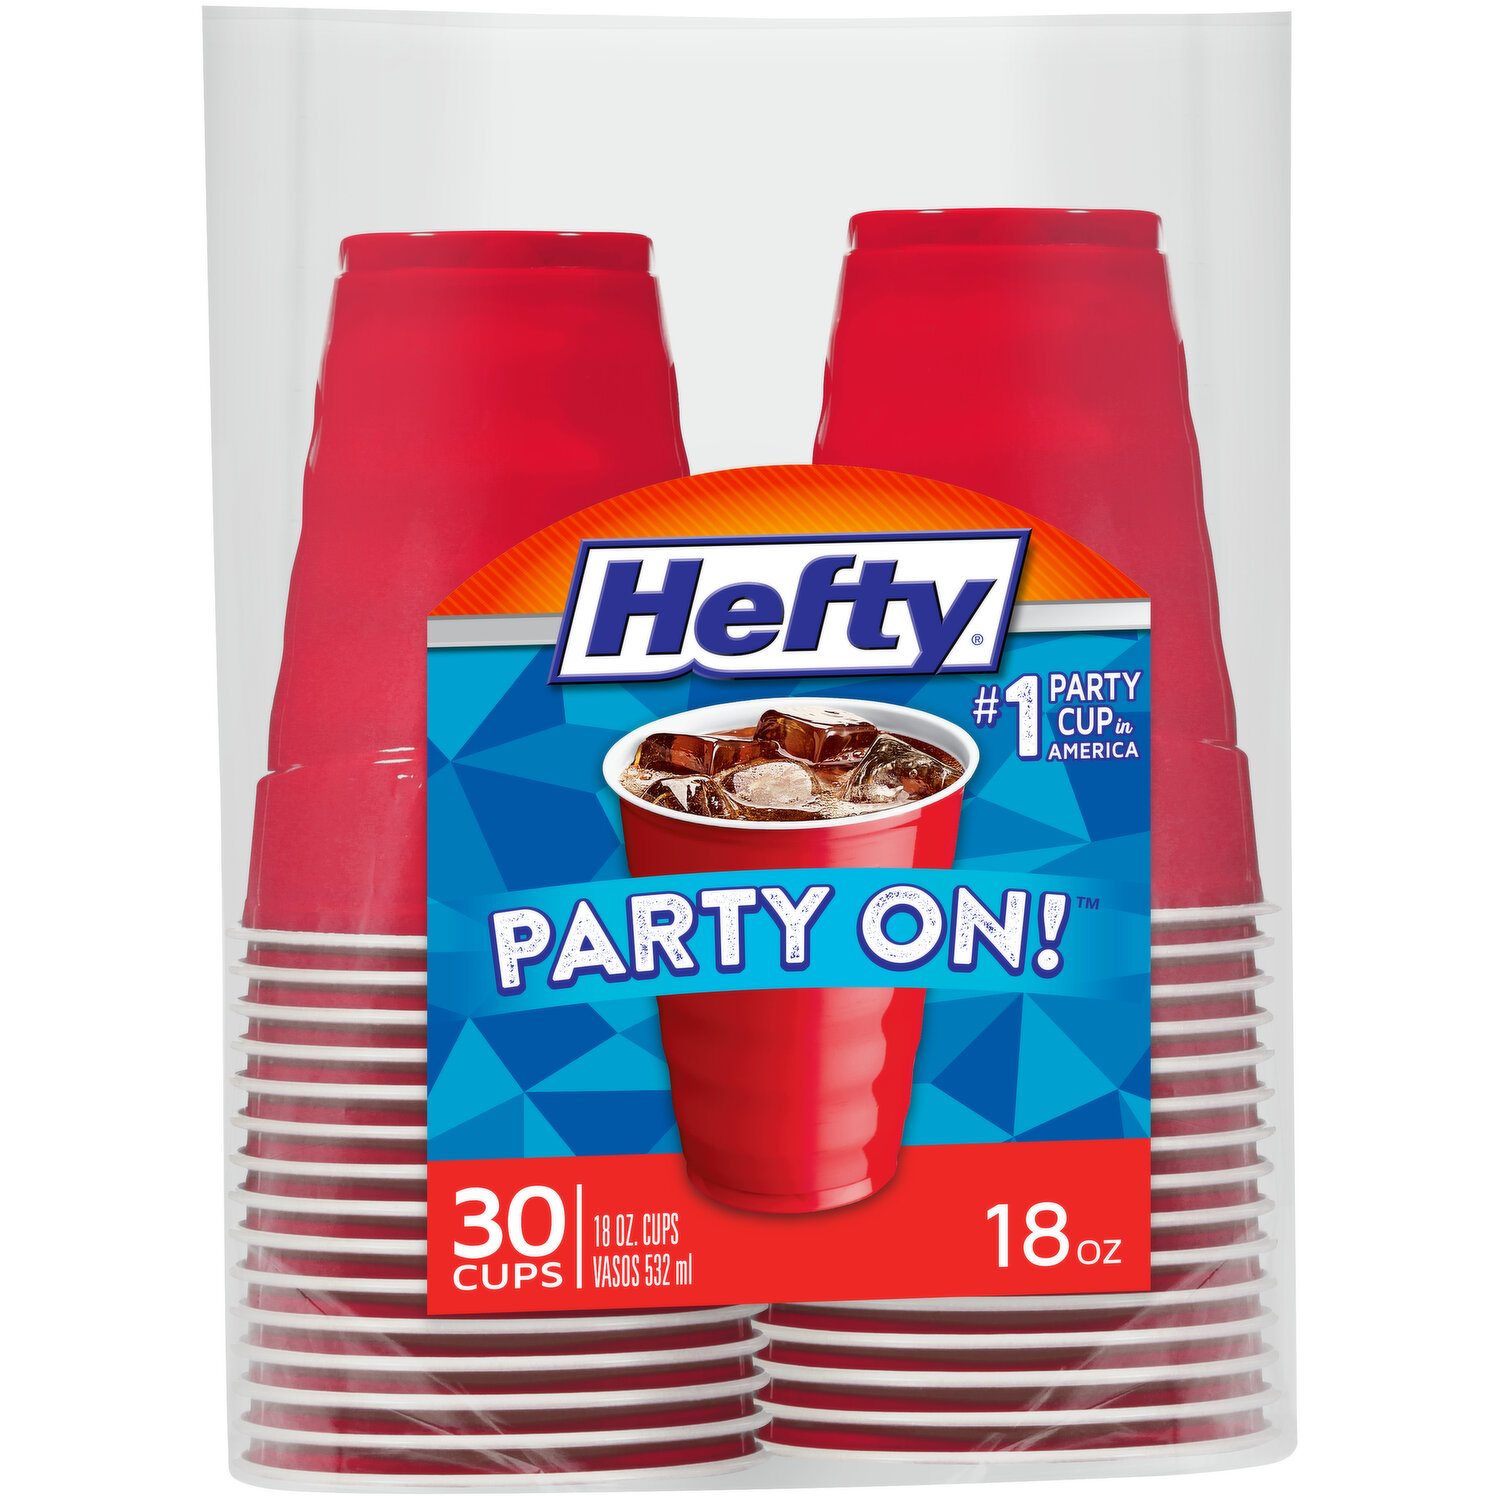 Hefty Hot Cups, To-Go, Leak Resistant Lids - 20 cups & lids